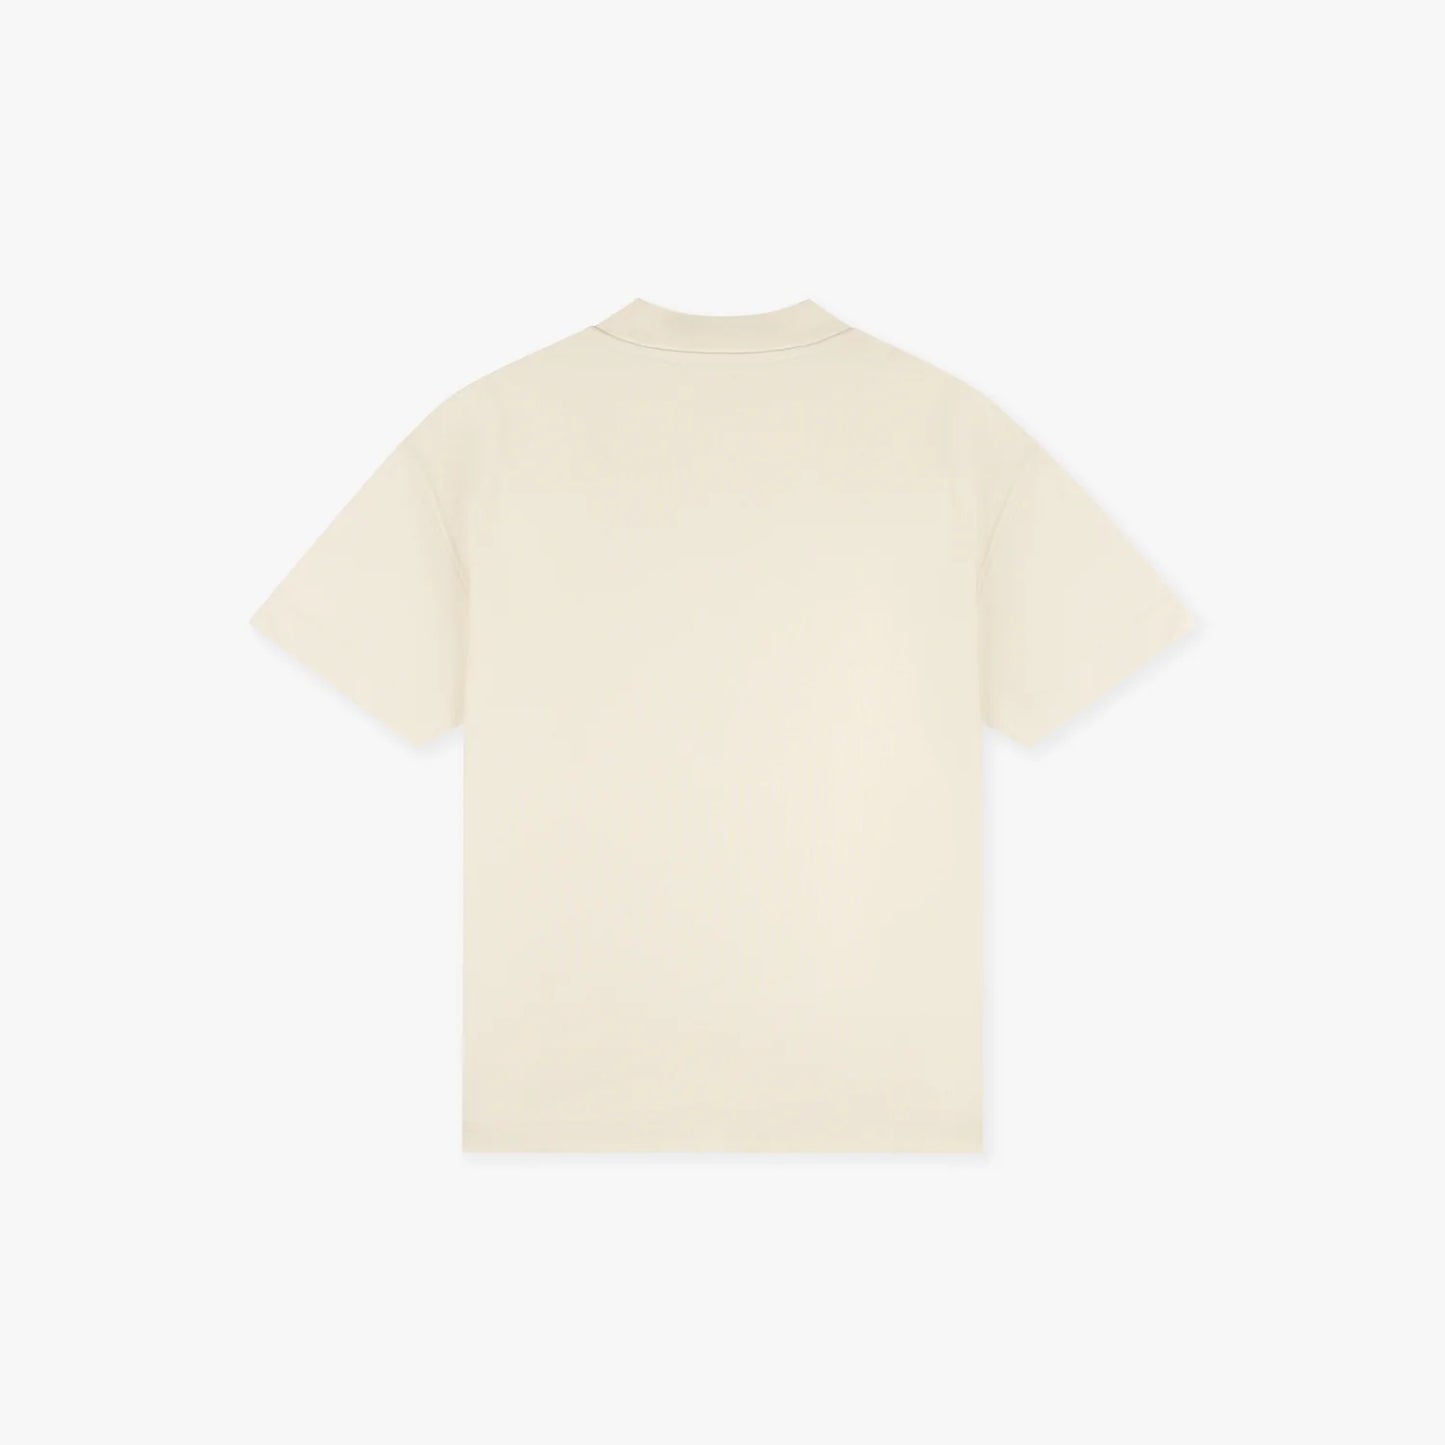 Croyez atelier t-shirt - beige/white